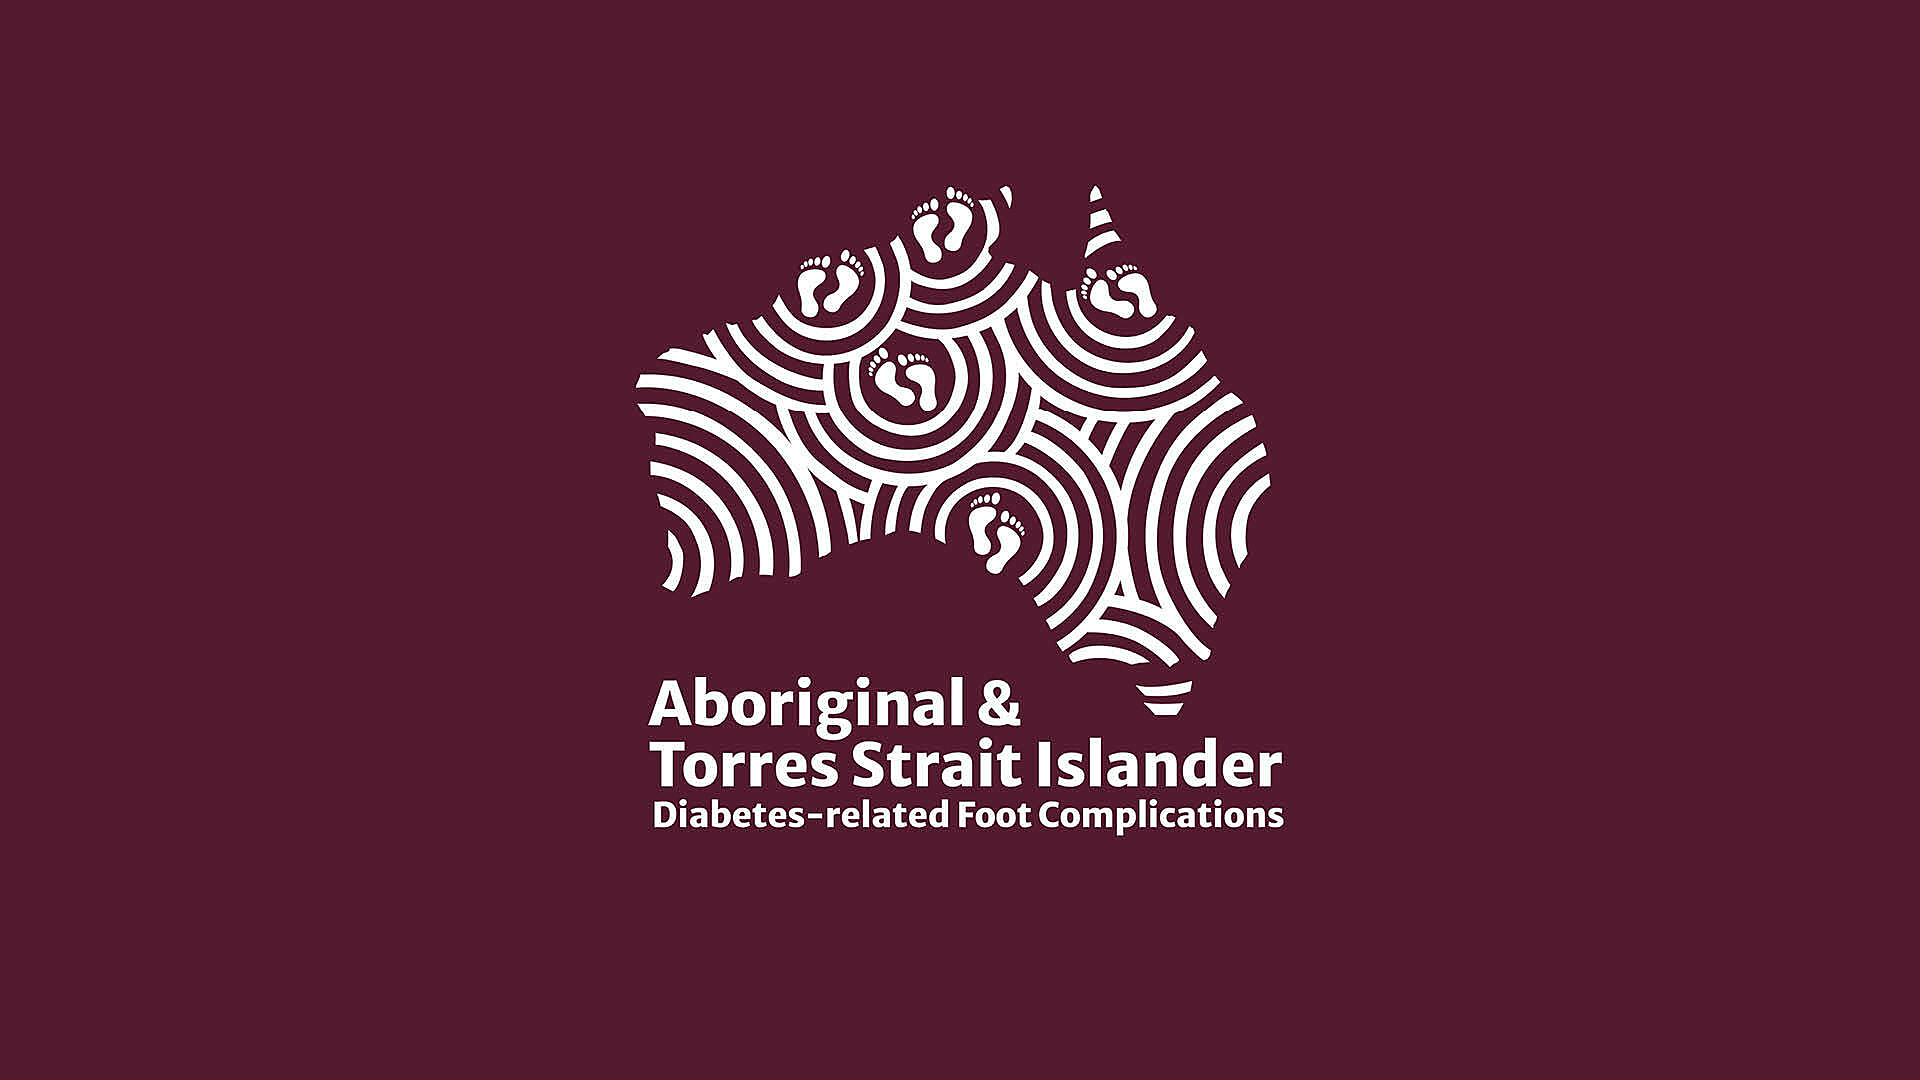 Aboriginal and Torres Strait Islander Diabetes-Related Foot Complications Program